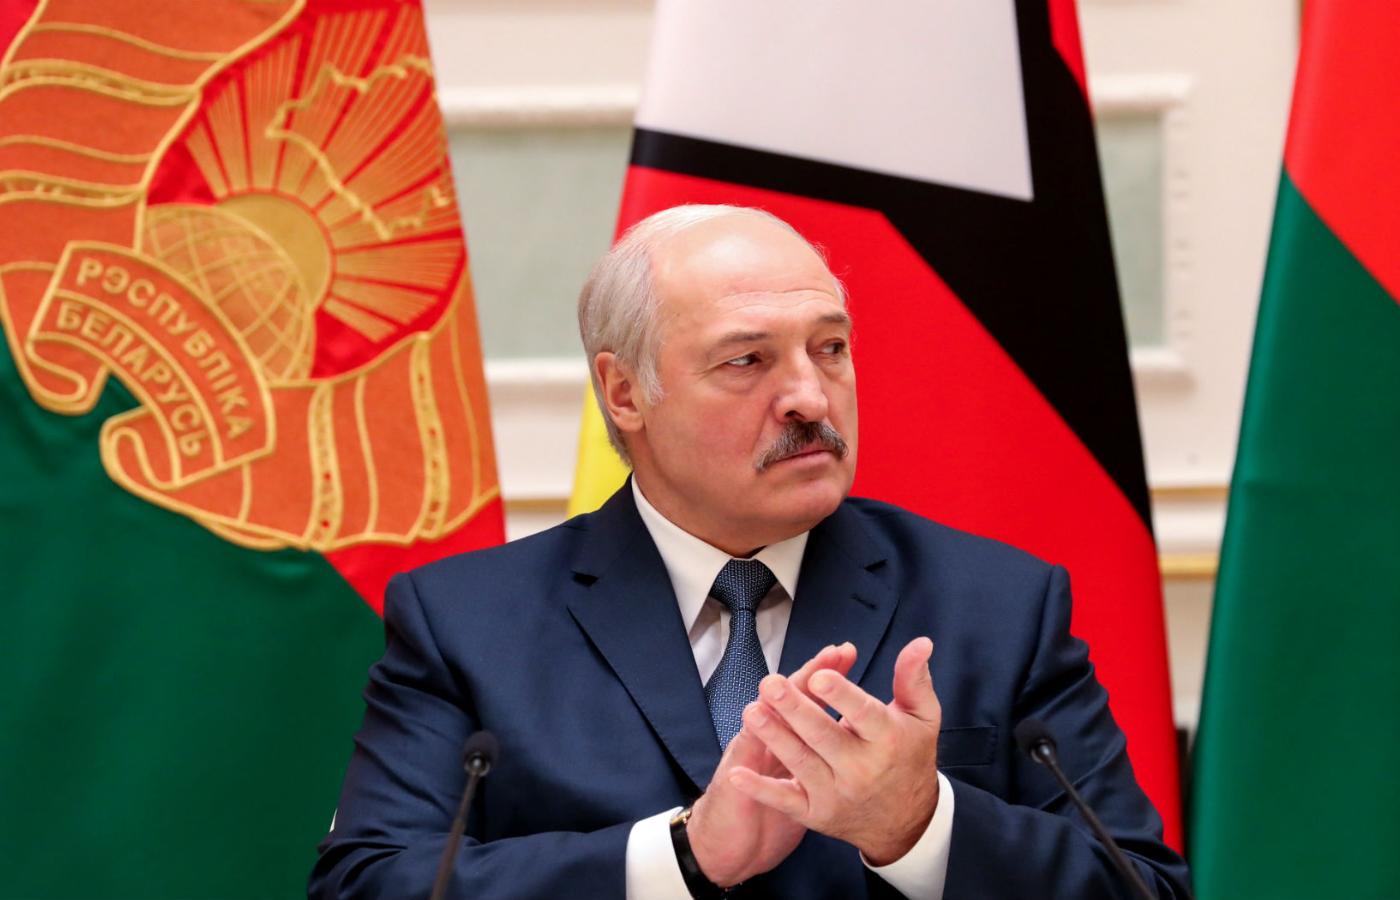 Aleksandr Łukaszenko